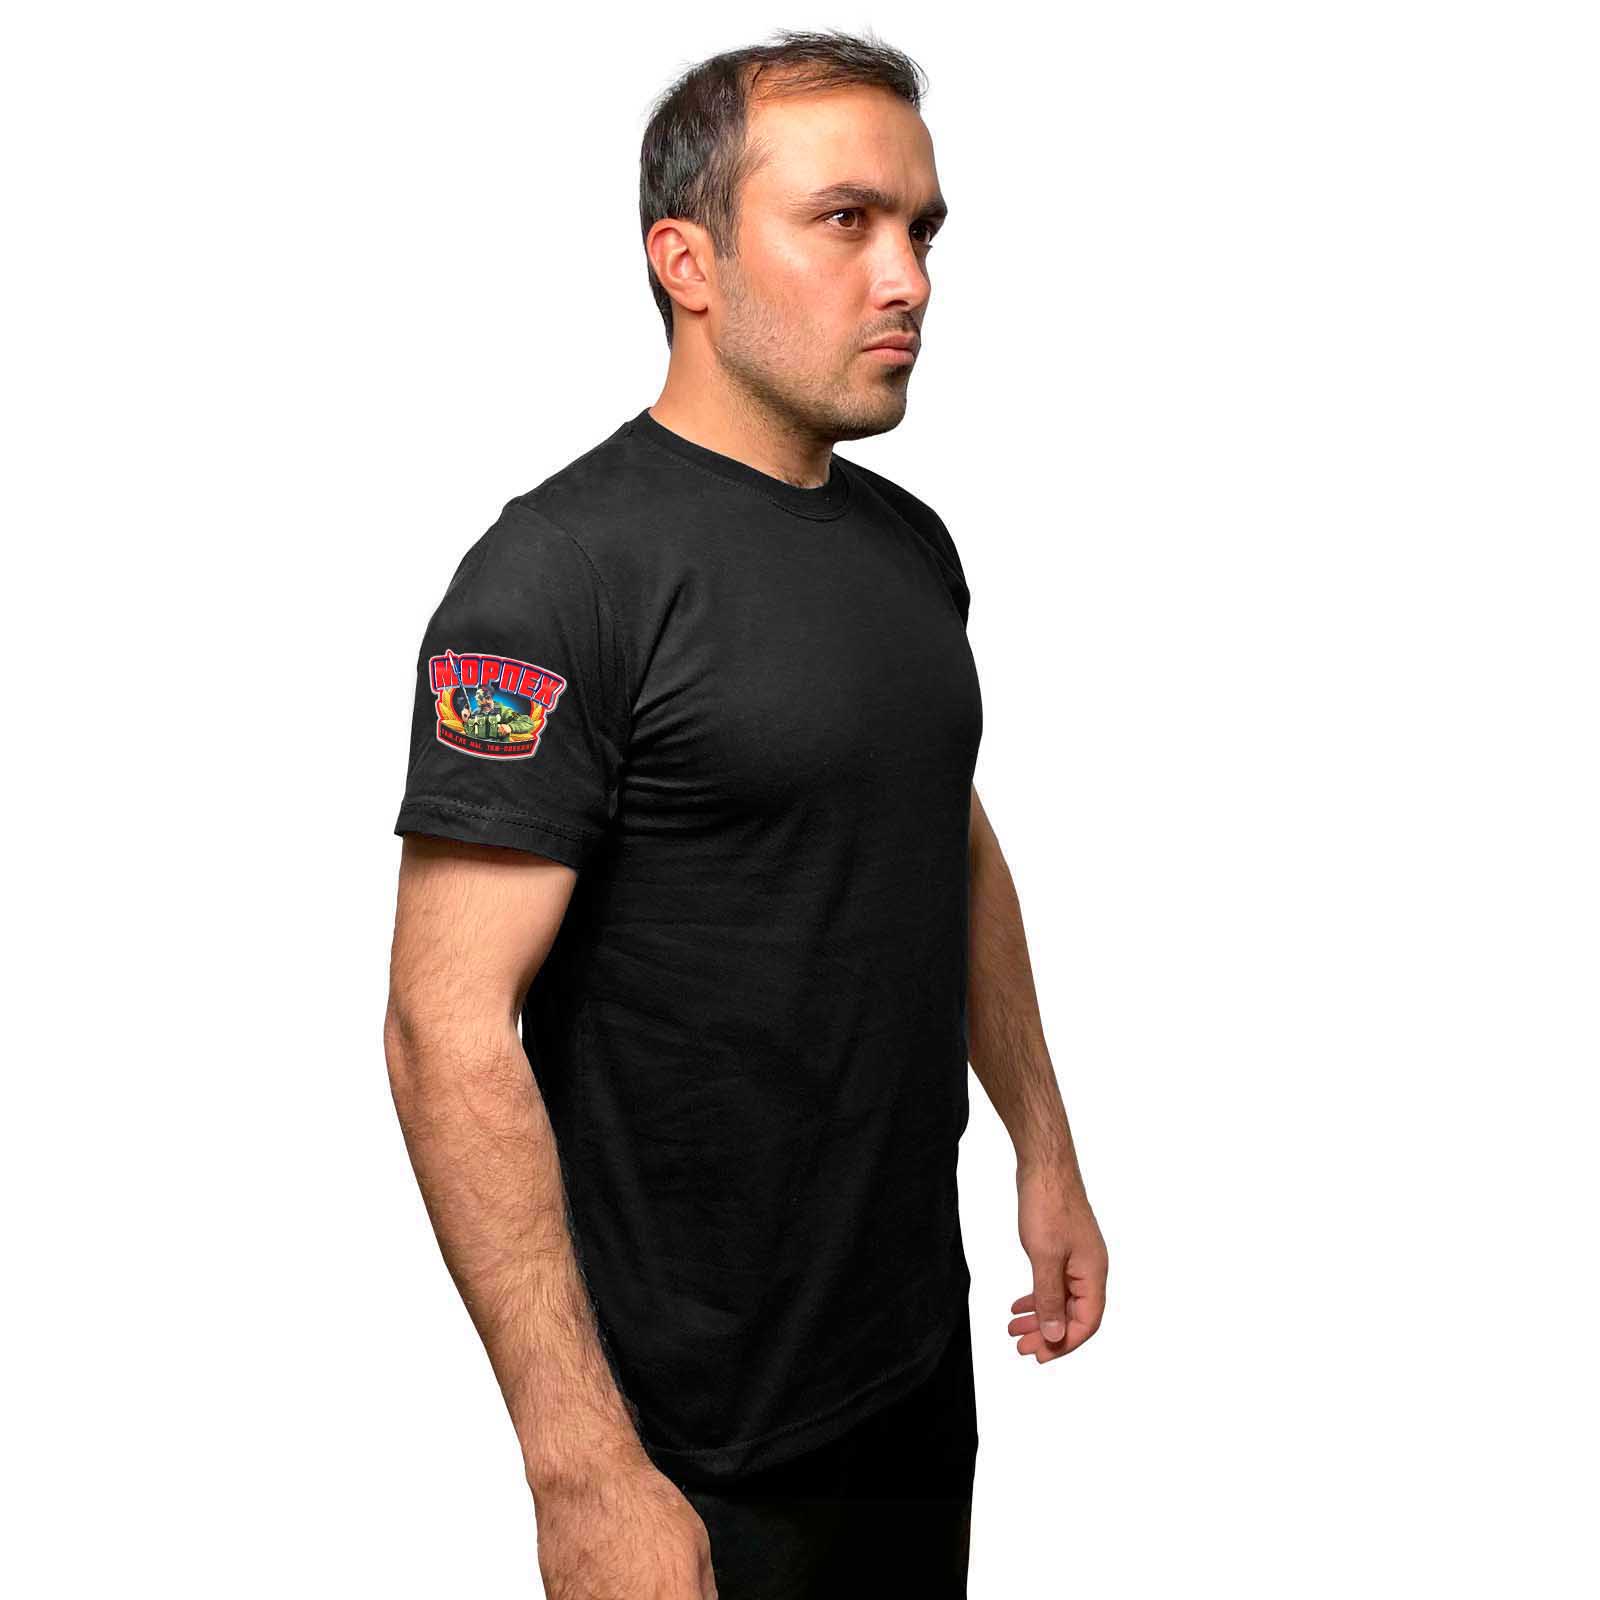 Чёрная футболка с термотрансфером "Морпех" на рукаве